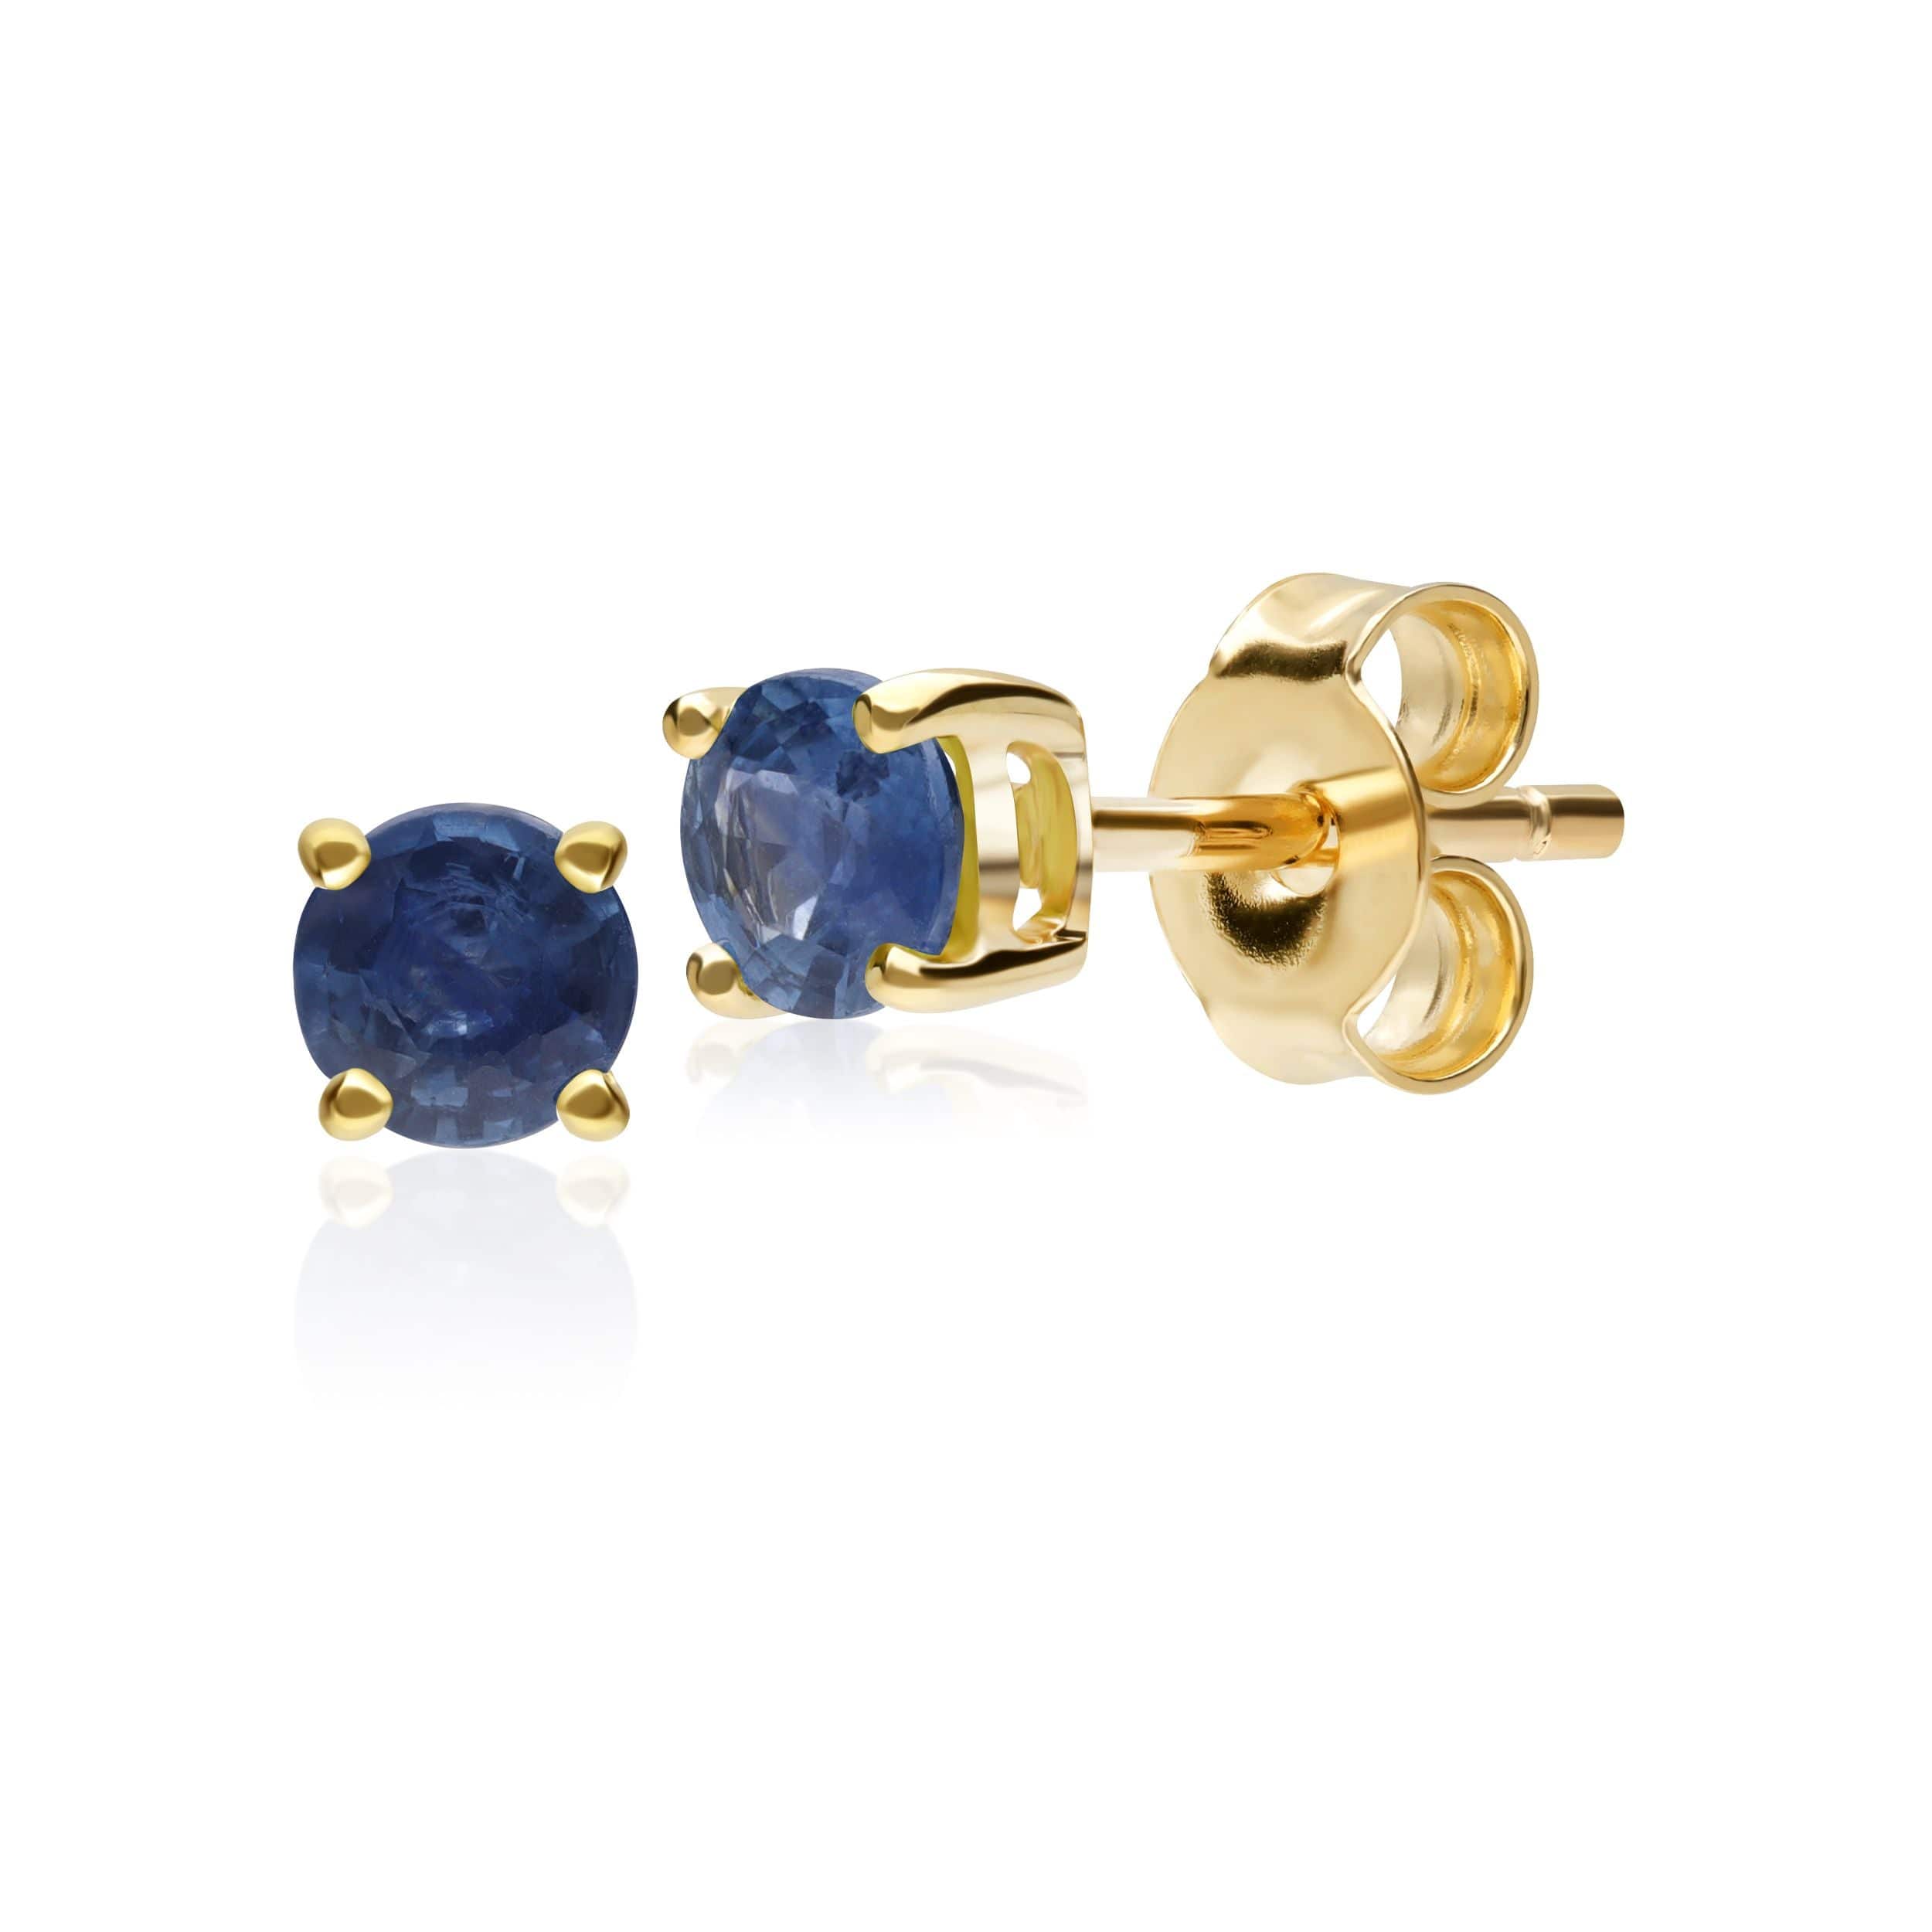 Classic Round Sapphire Stud Earrings in 9ct Yellow Gold 3.5mm - Gemondo